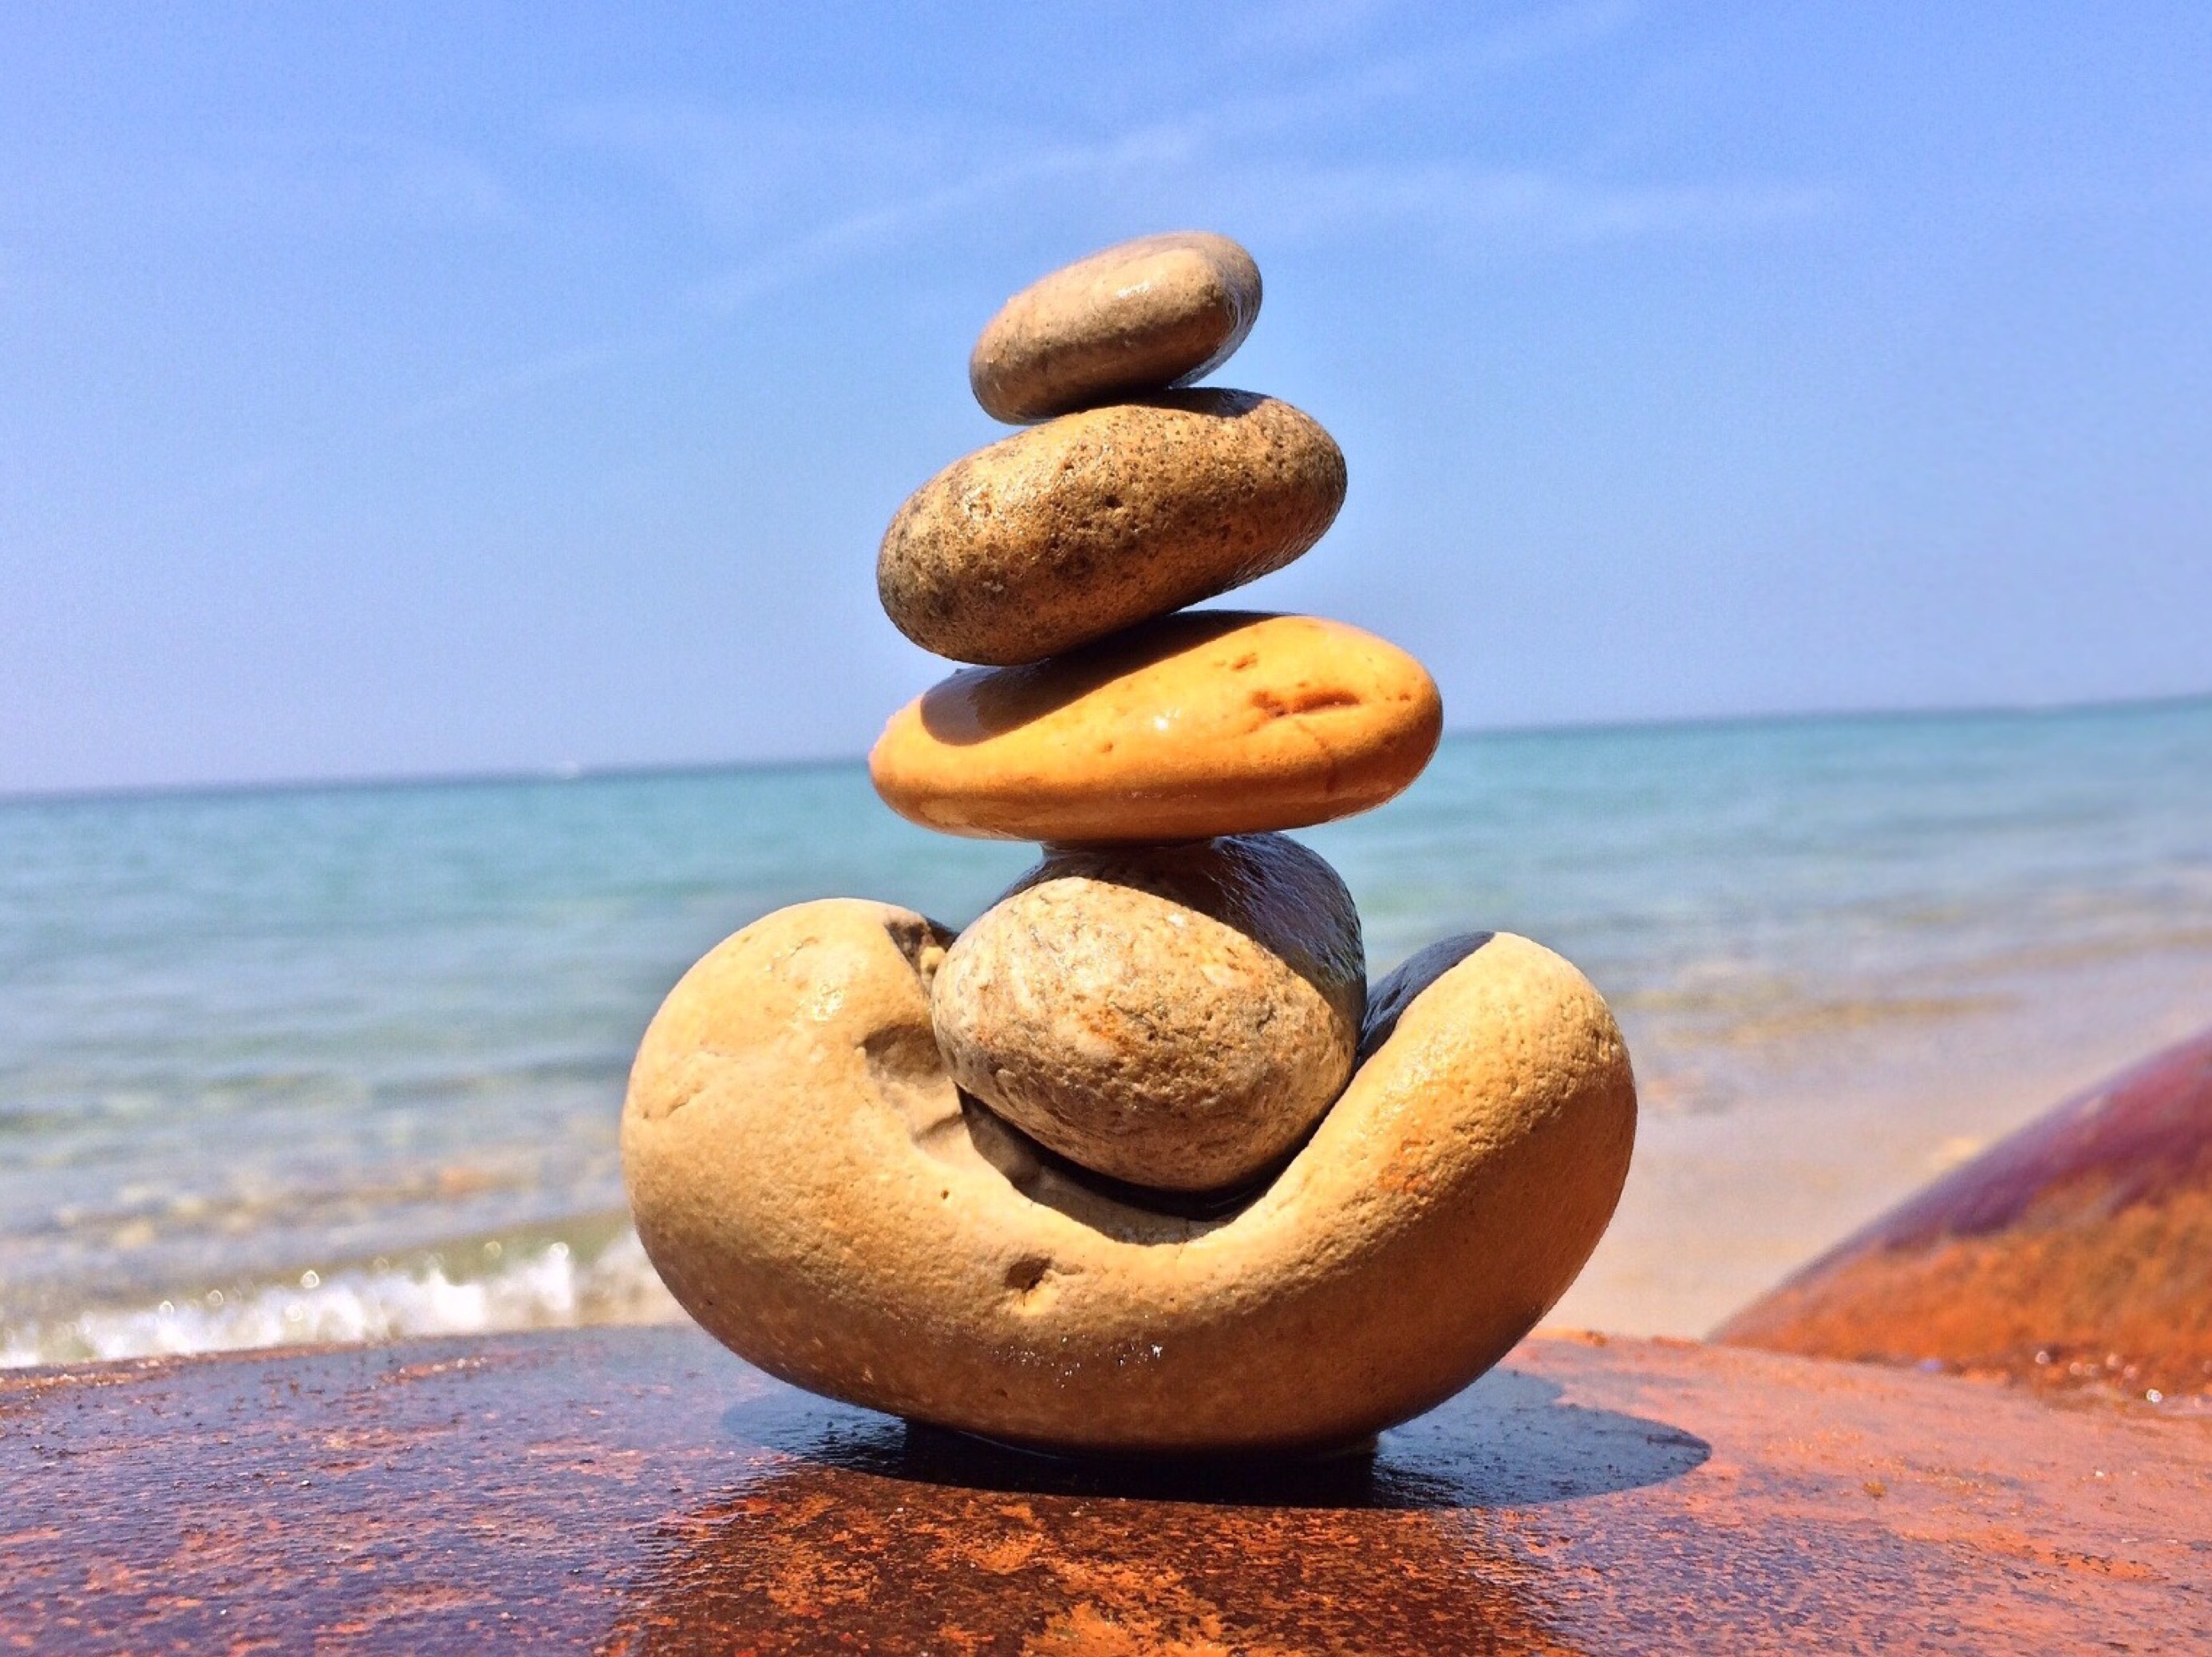 Premium Photo  A person stacking rocks on a beach.